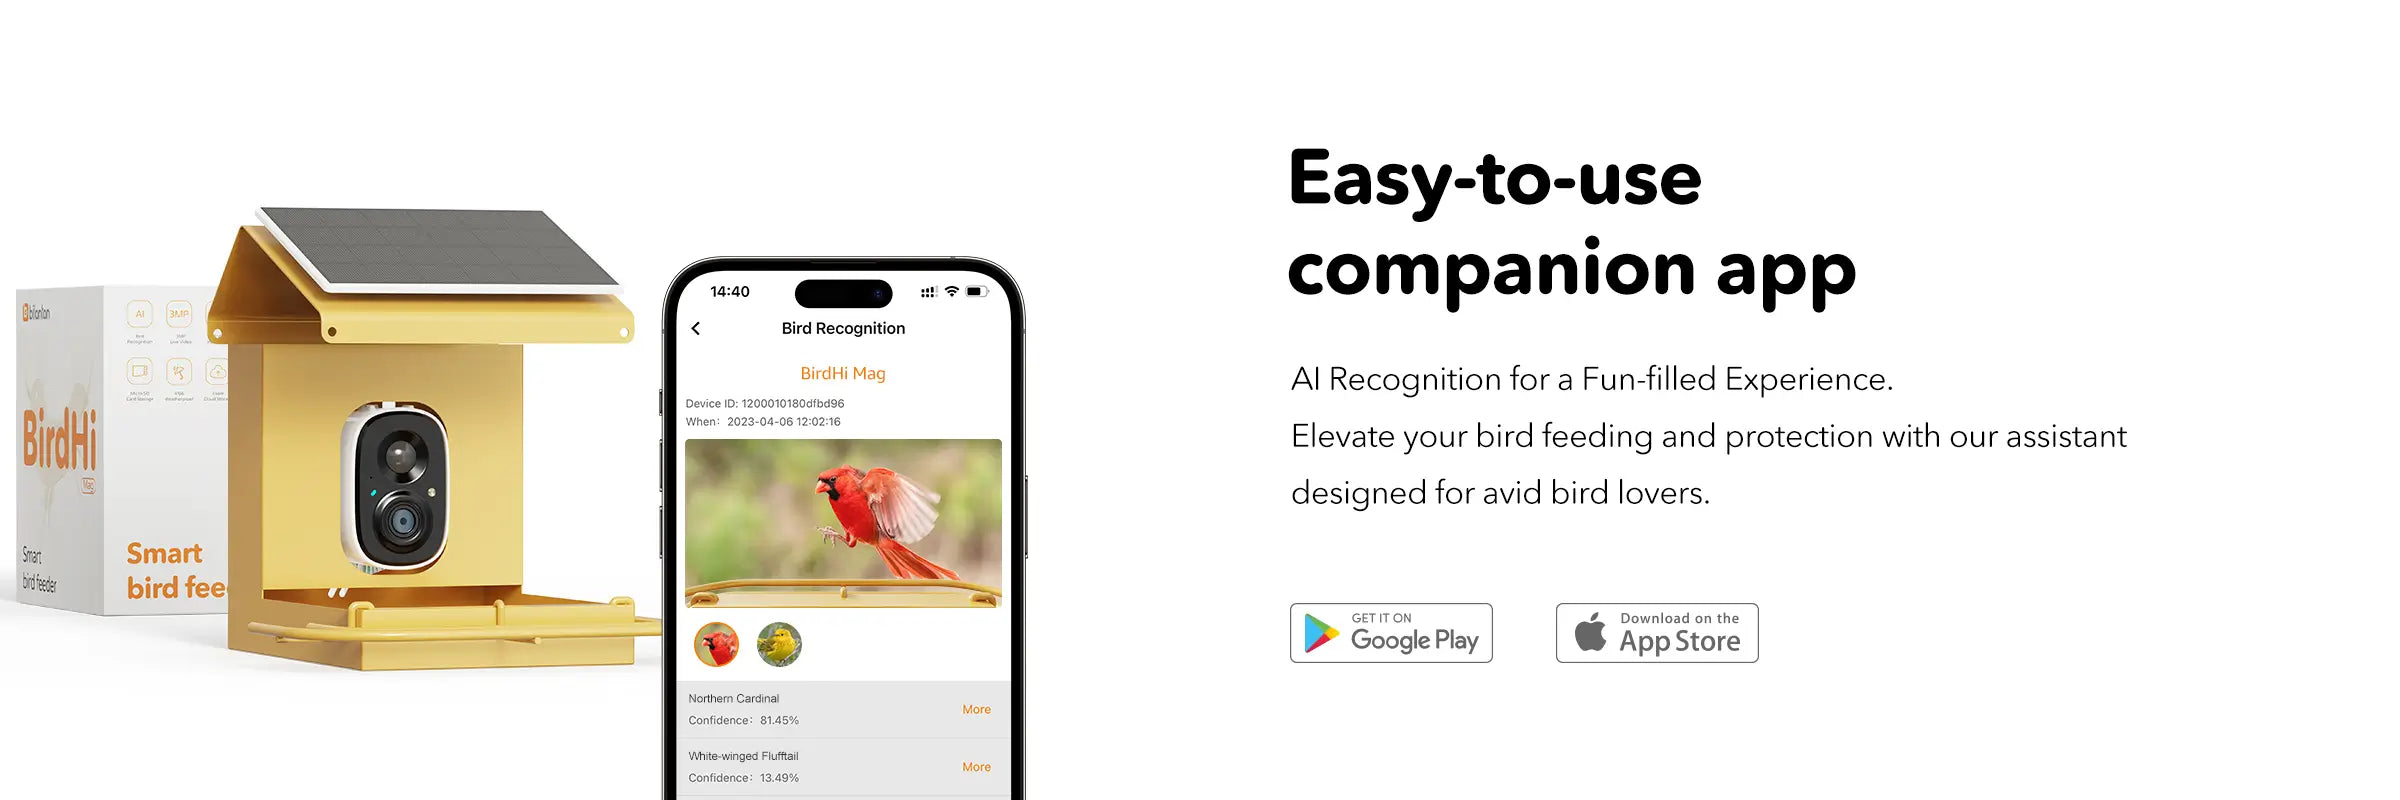 BirdHi Mag Easy-to-use companion app. Bilantan Bird Feeder Camera. bird house with camera